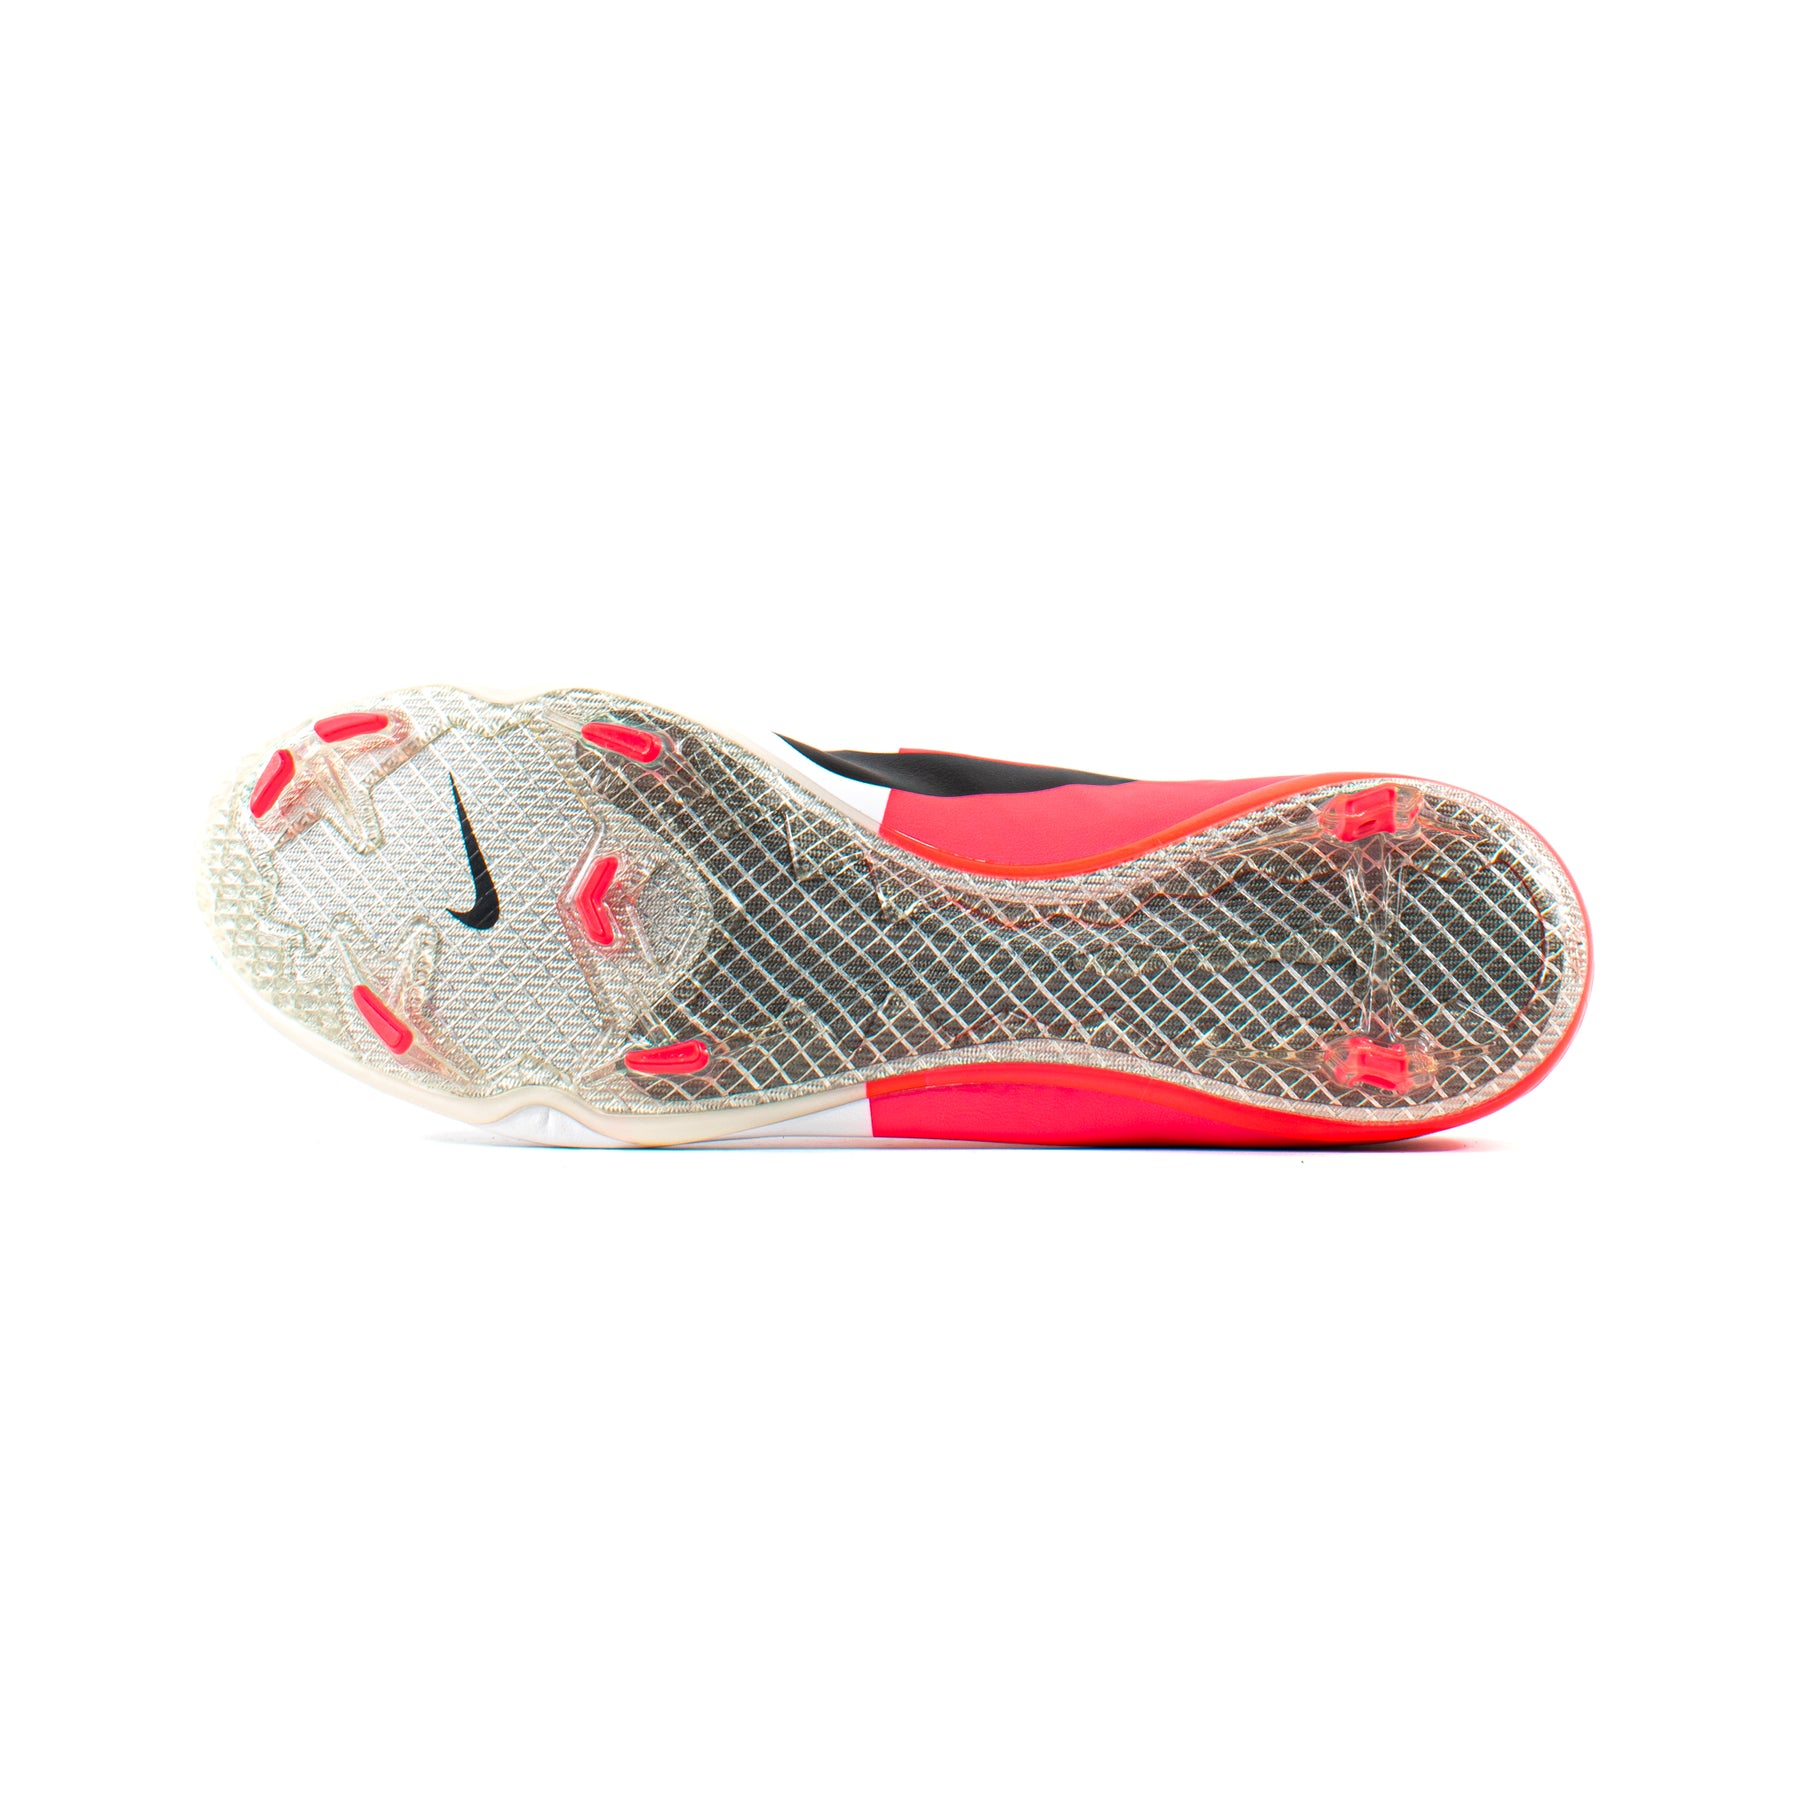 Nike Mercurial VIII Clash 2012 FG – Soccer Cleats